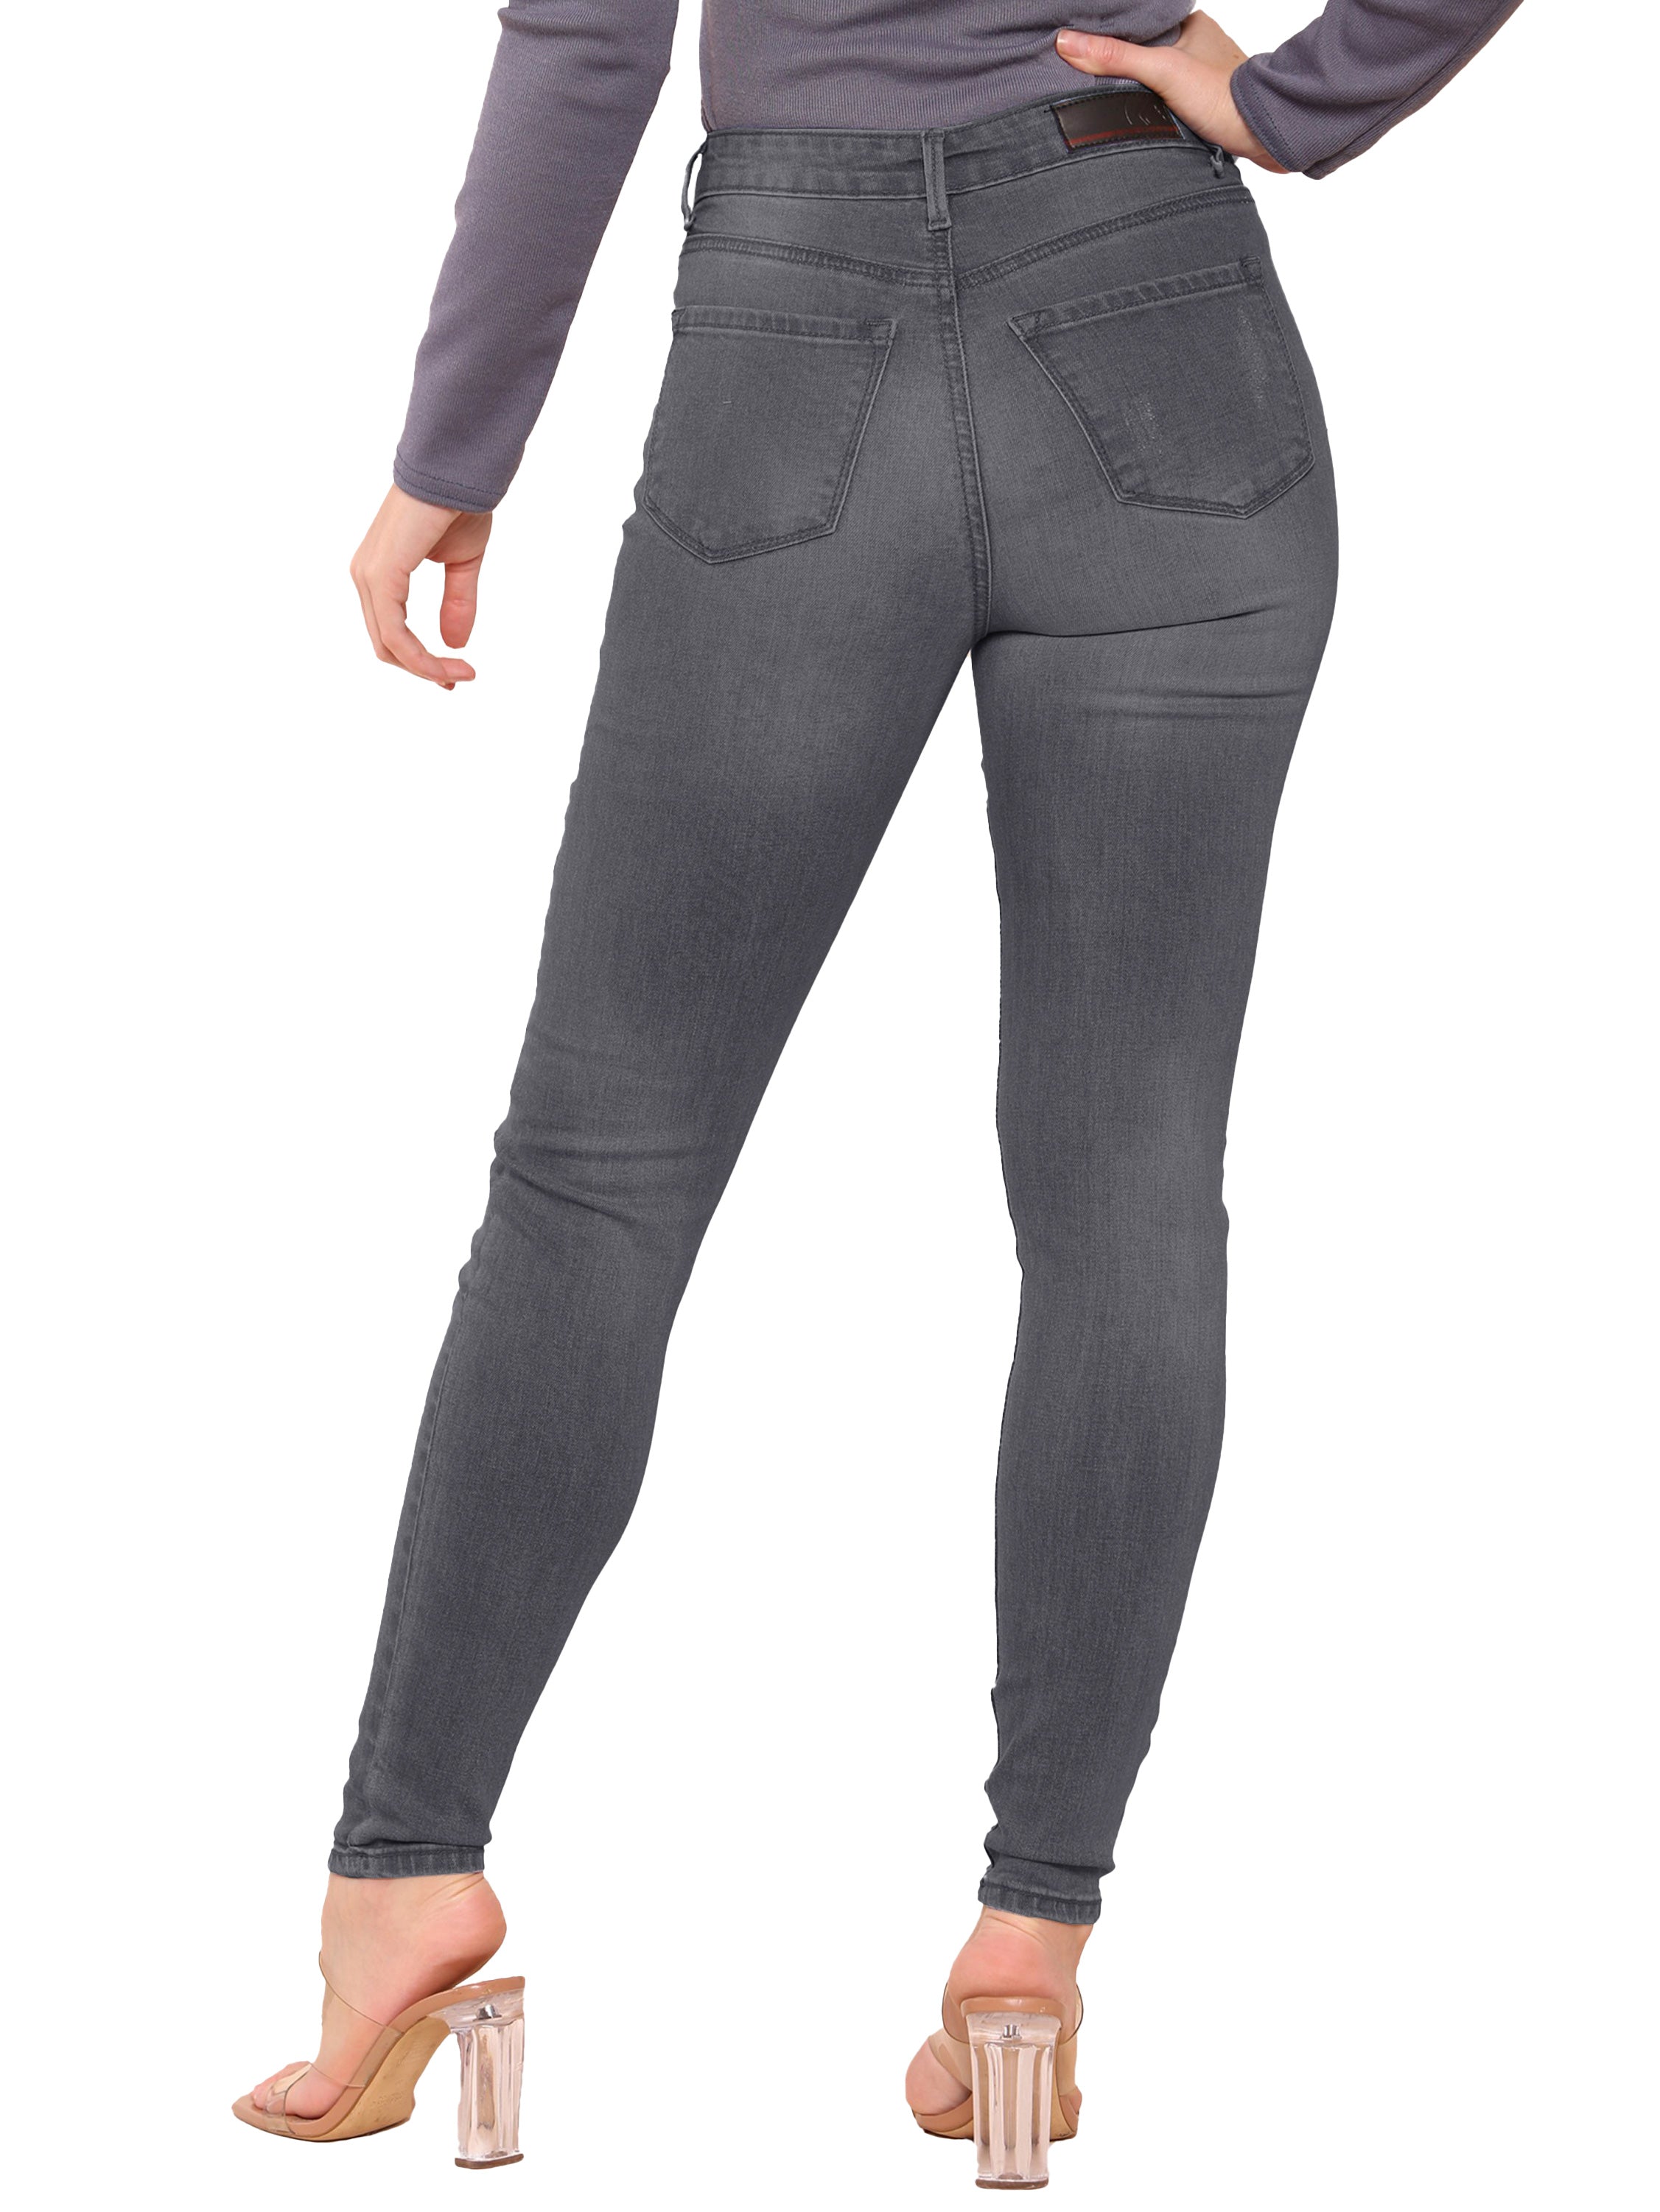 Enzo Womens Skinny Jeans Ladies Slim Fit Stretch New Denim Trouser